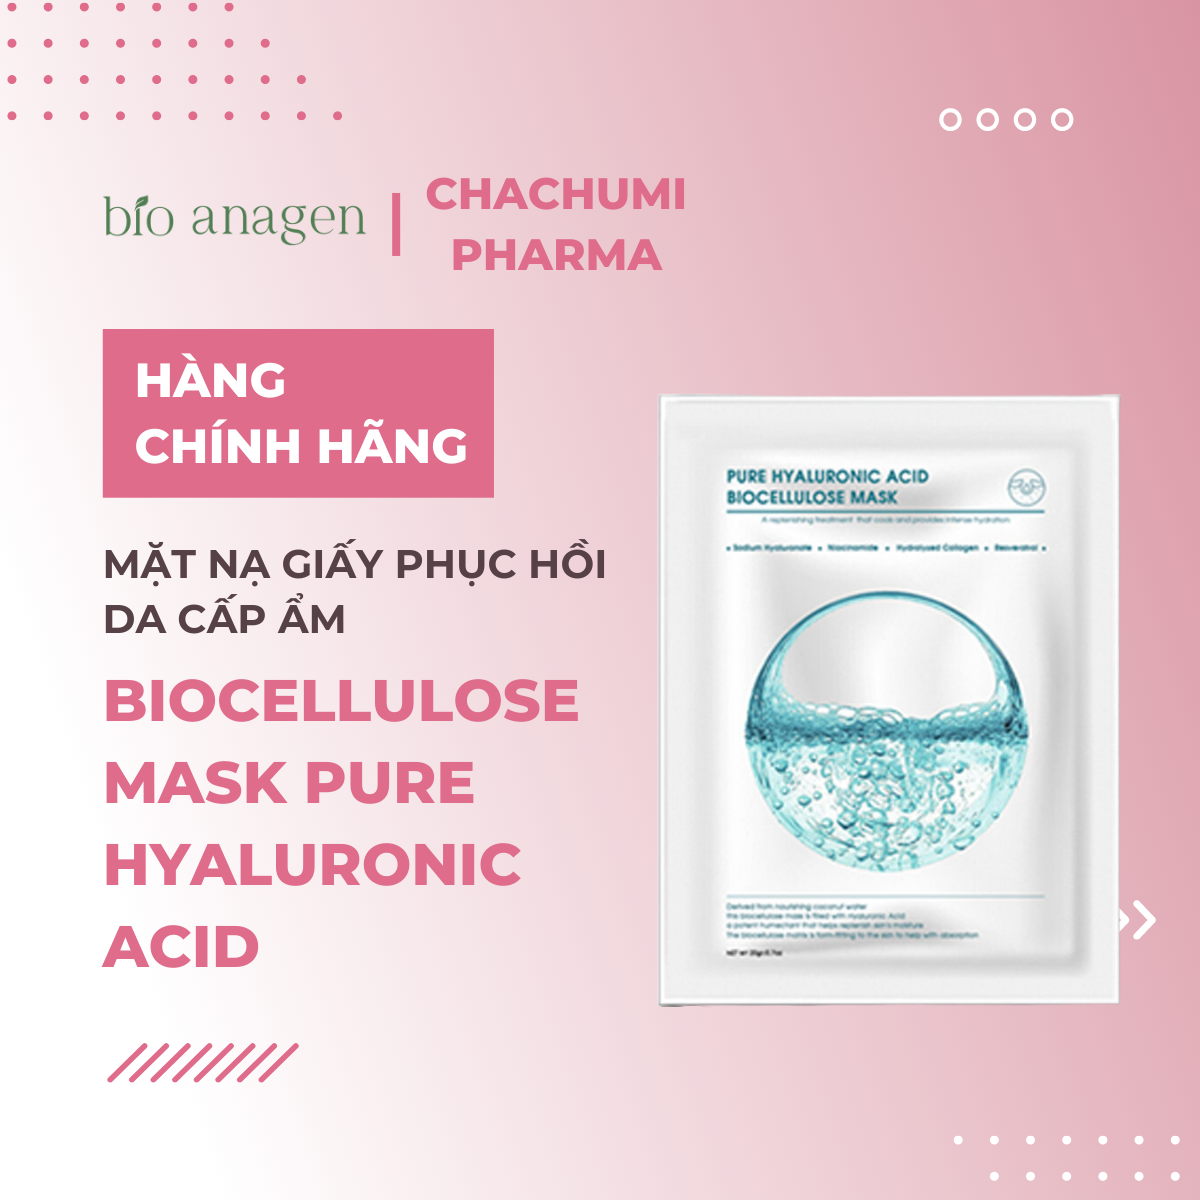 Biocellulose Mask Pure Hyaluronic Acid - Mặt nạ giấy phục hồi da cấp ẩm 20gr